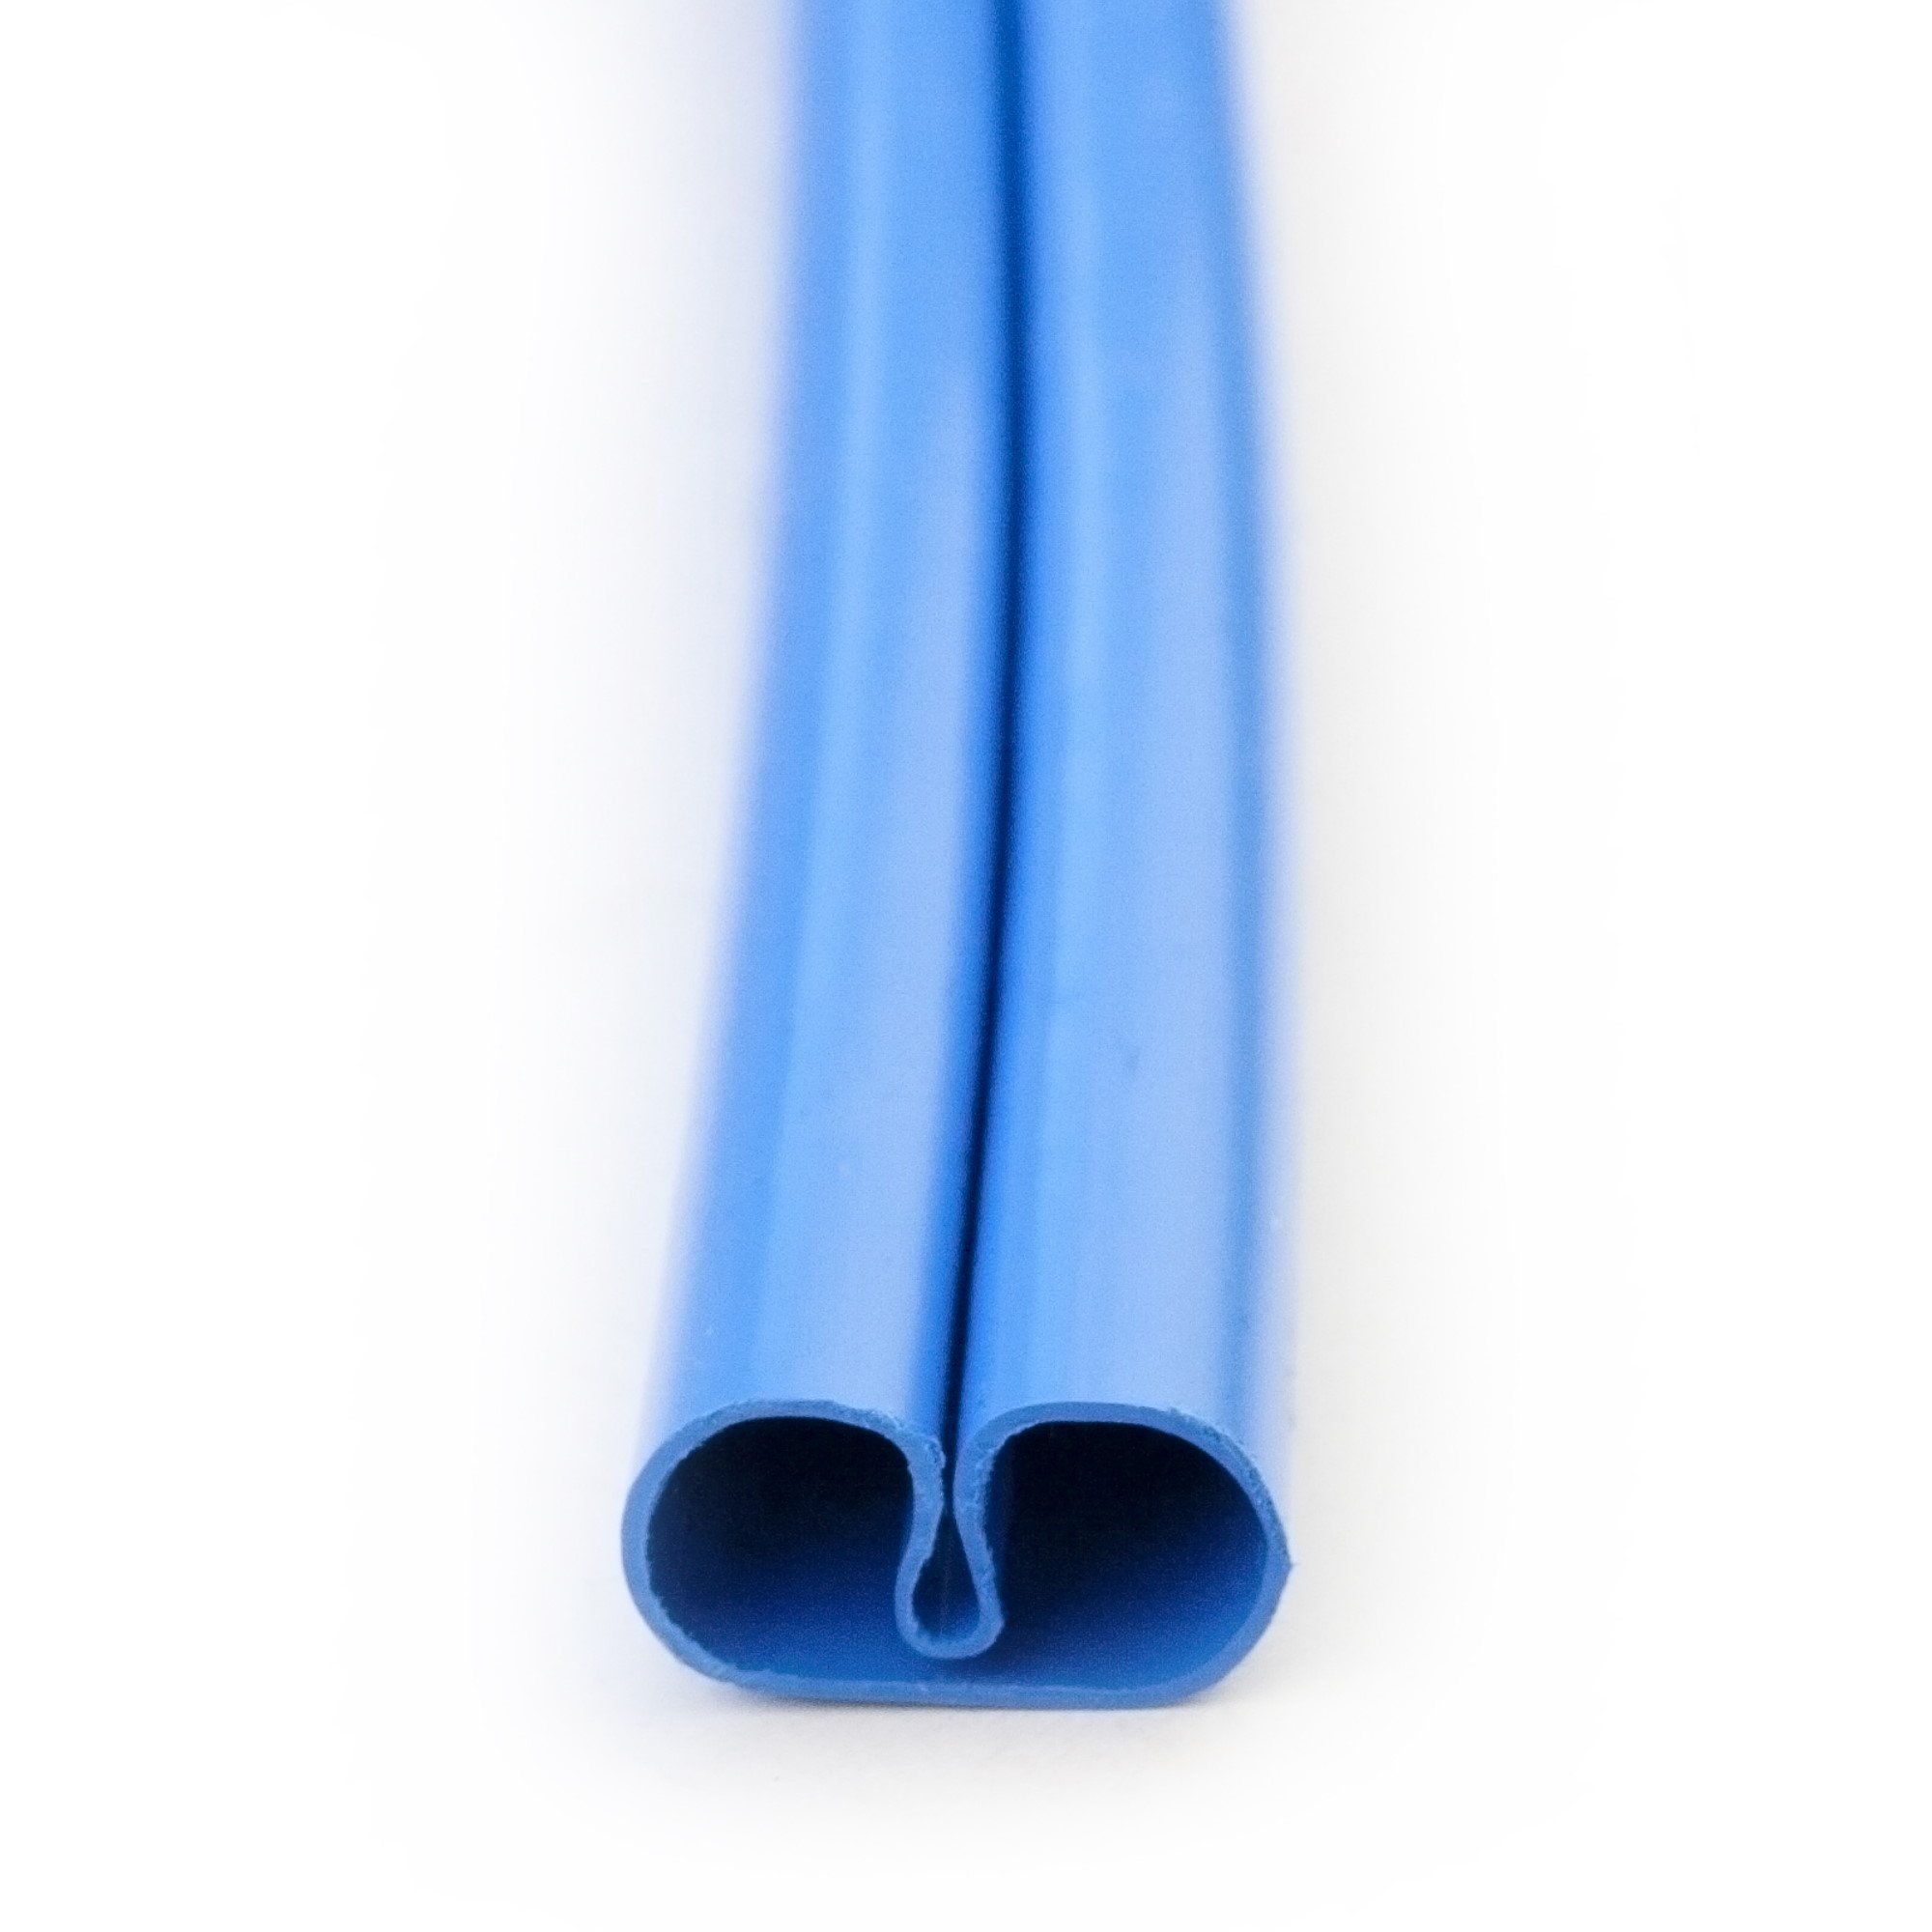 Stahlwandpool Set rund Acapulco 450x90 cm, Stahl 0,3 mm weiß, Folie 0,2 mm blau, overlap